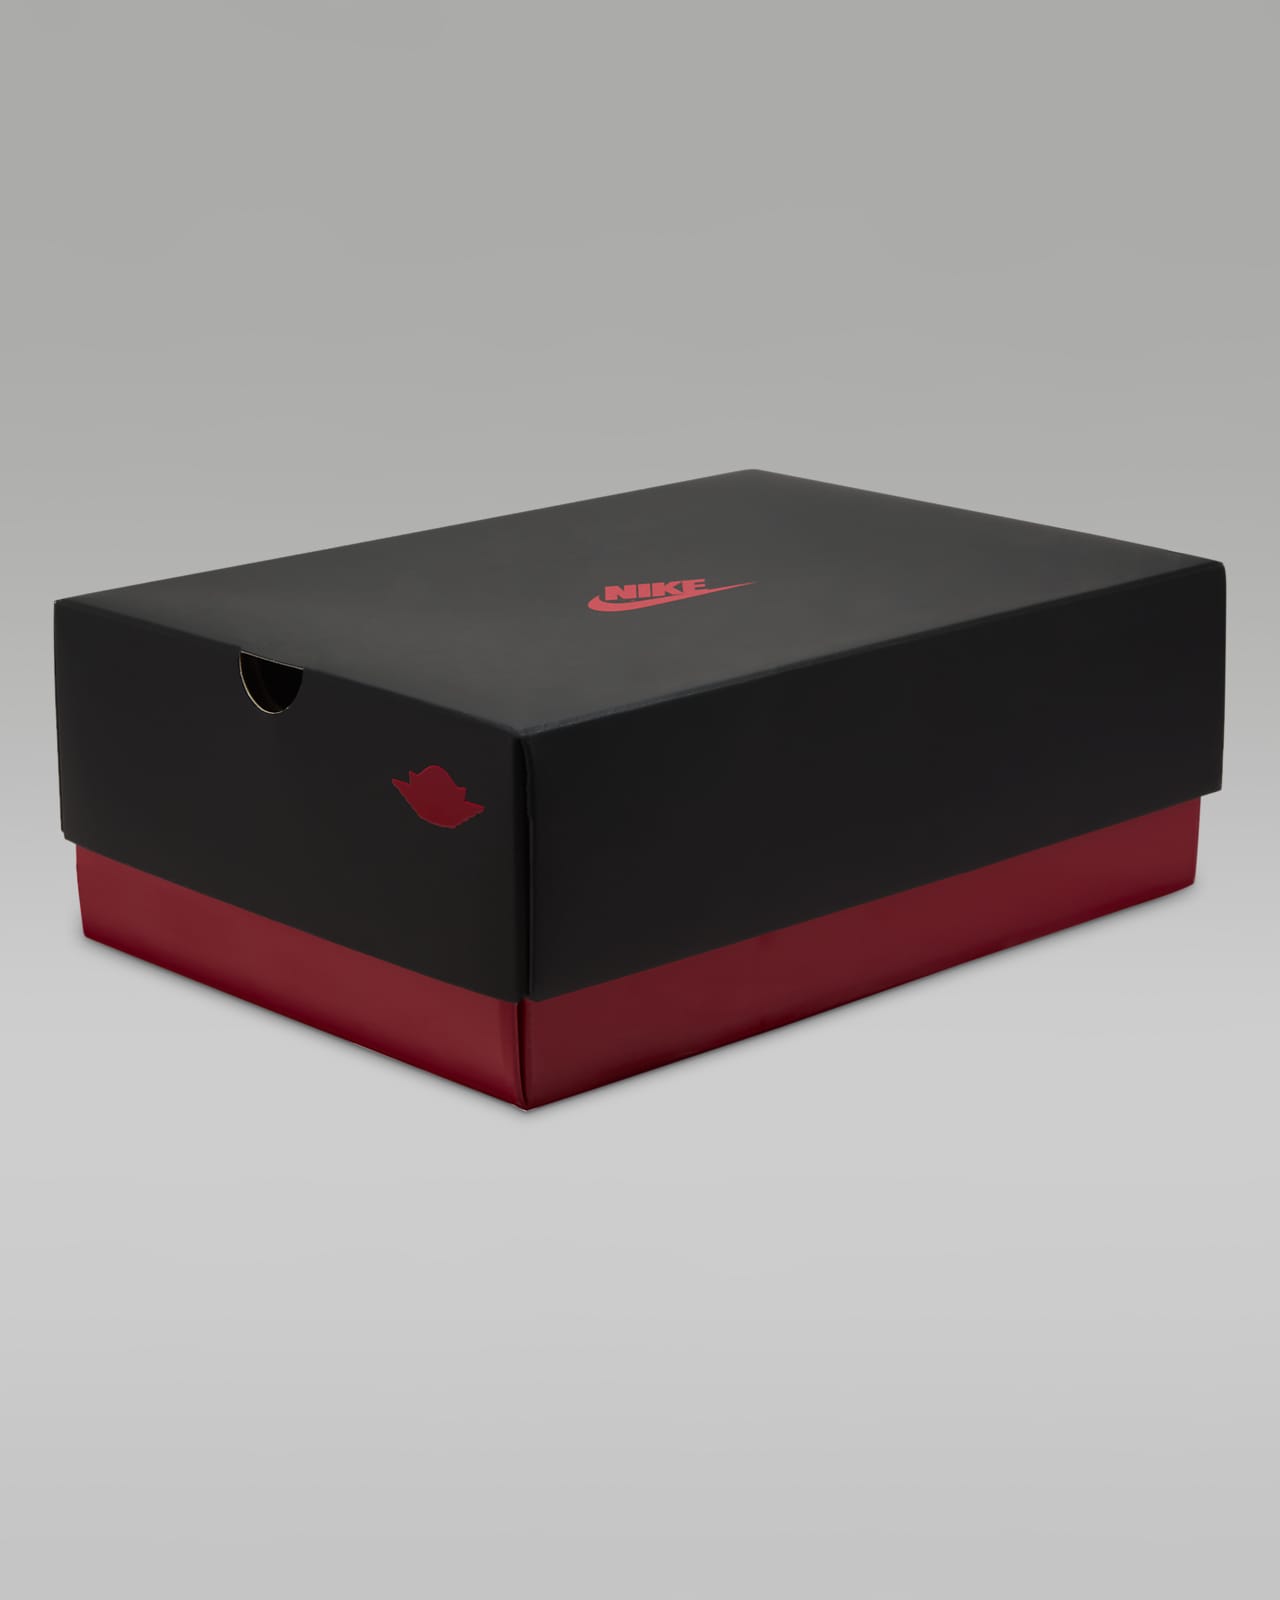 Nike/Jordan mini shoe chain Pair With The Box